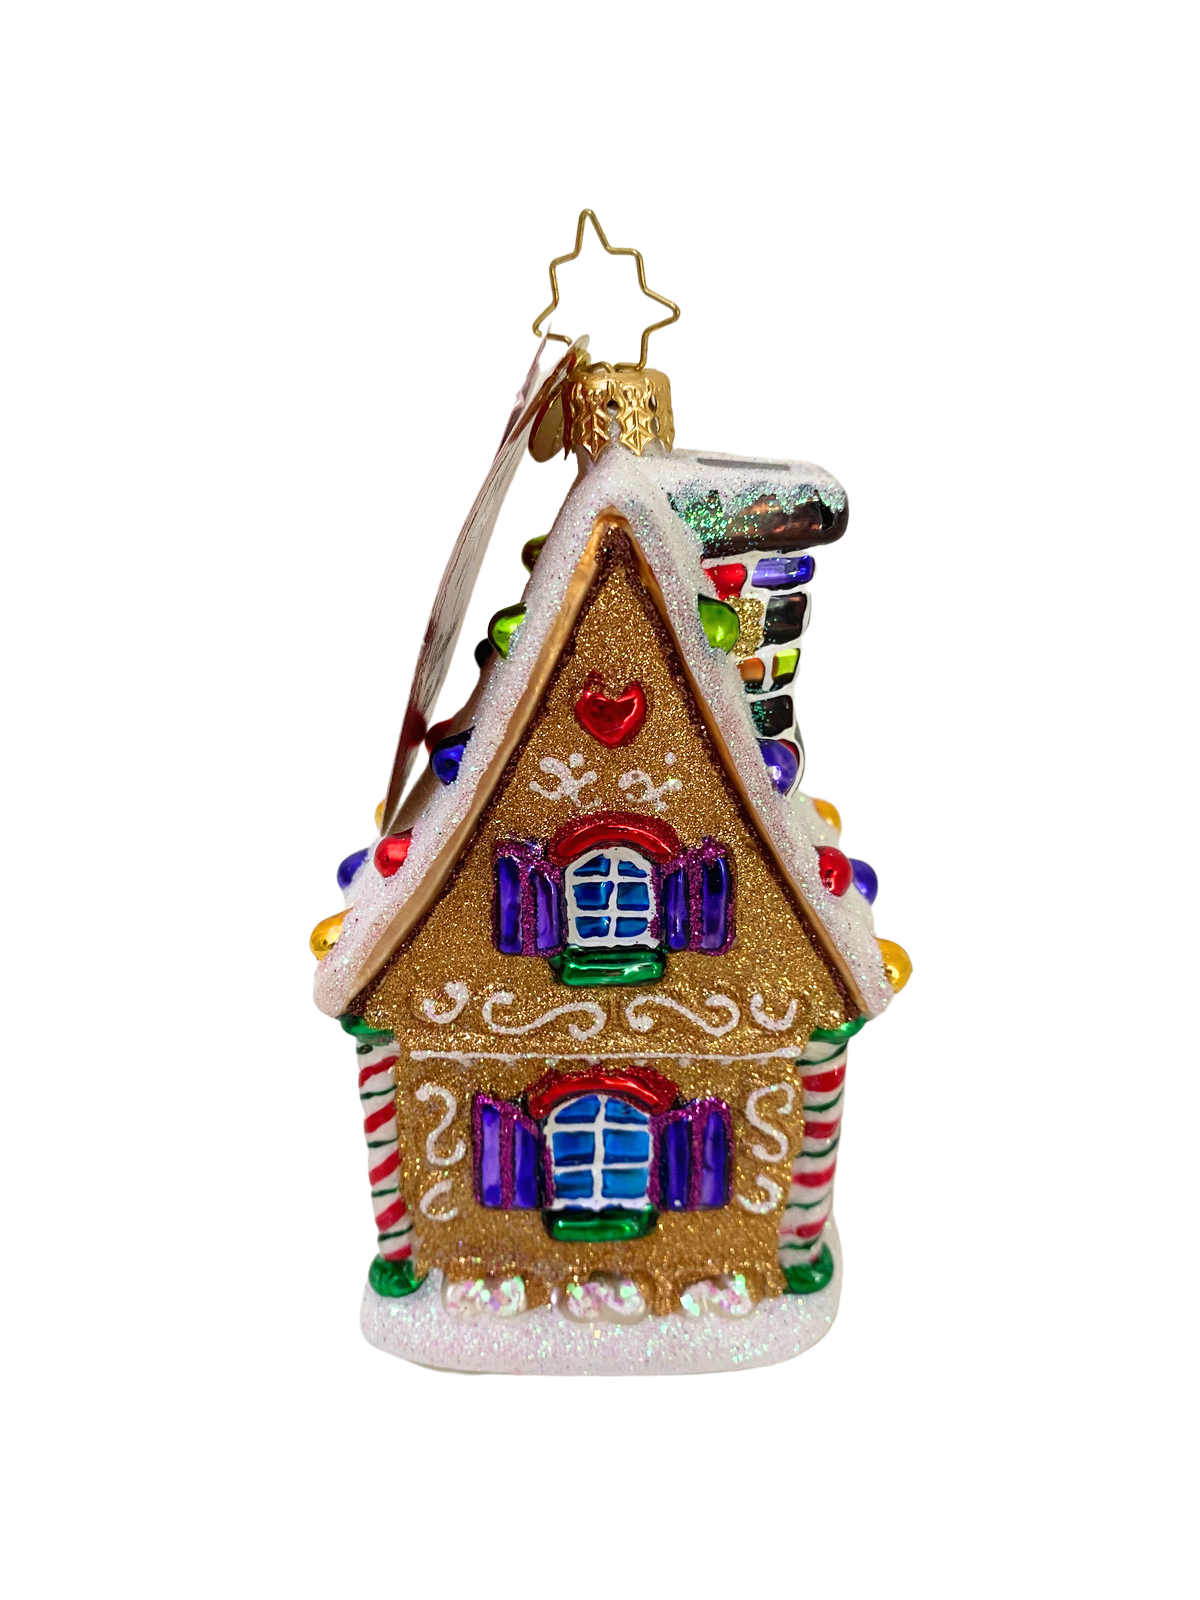 Delicious Treasure Gingerbread House Ornament